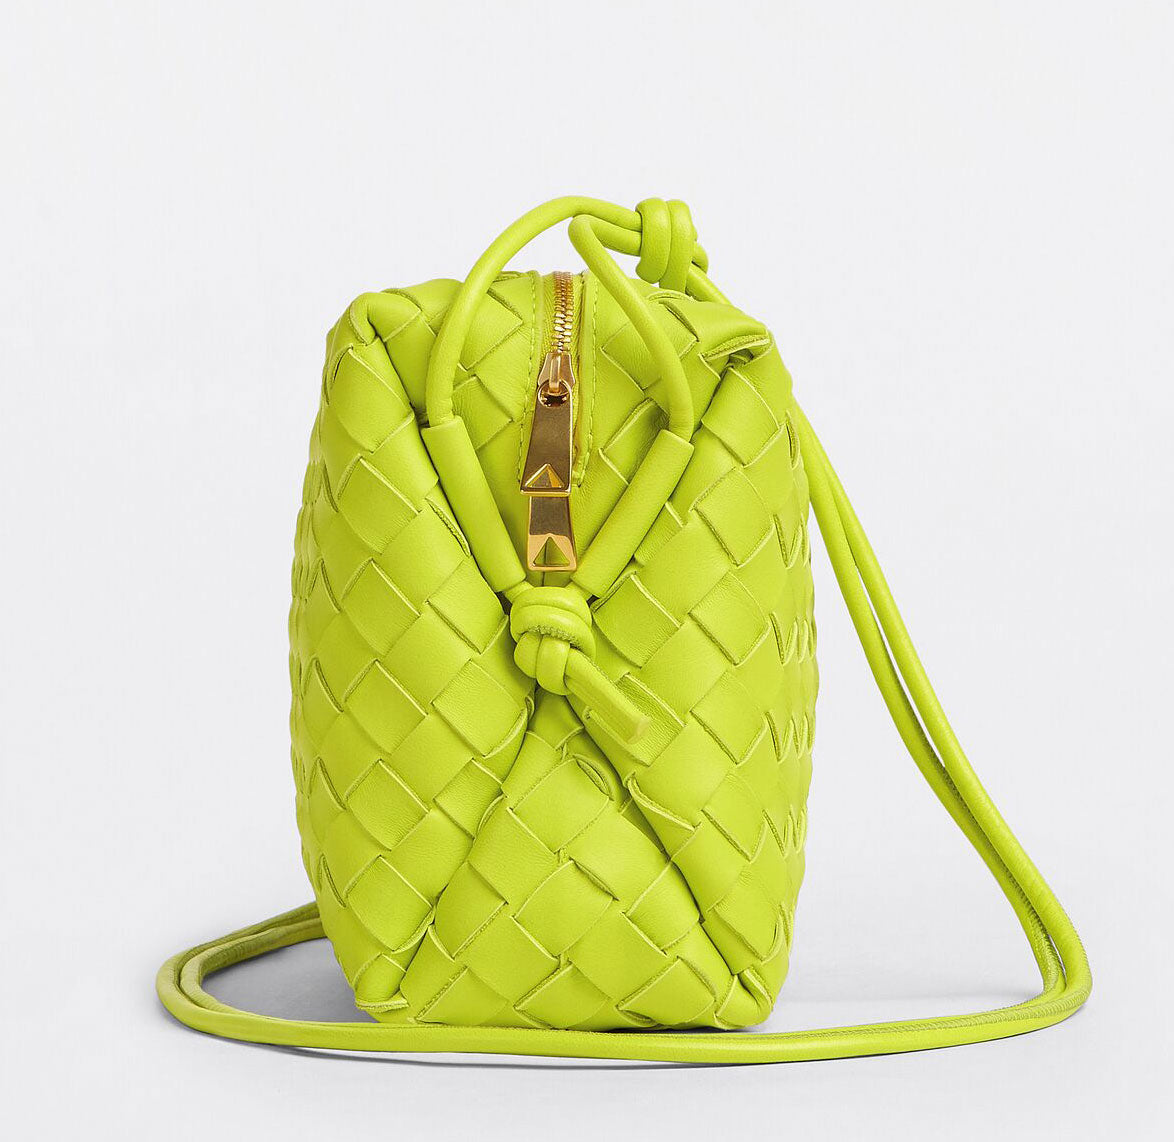 Bottega Veneta new Loop bag - mini - Cultstatus Boutique